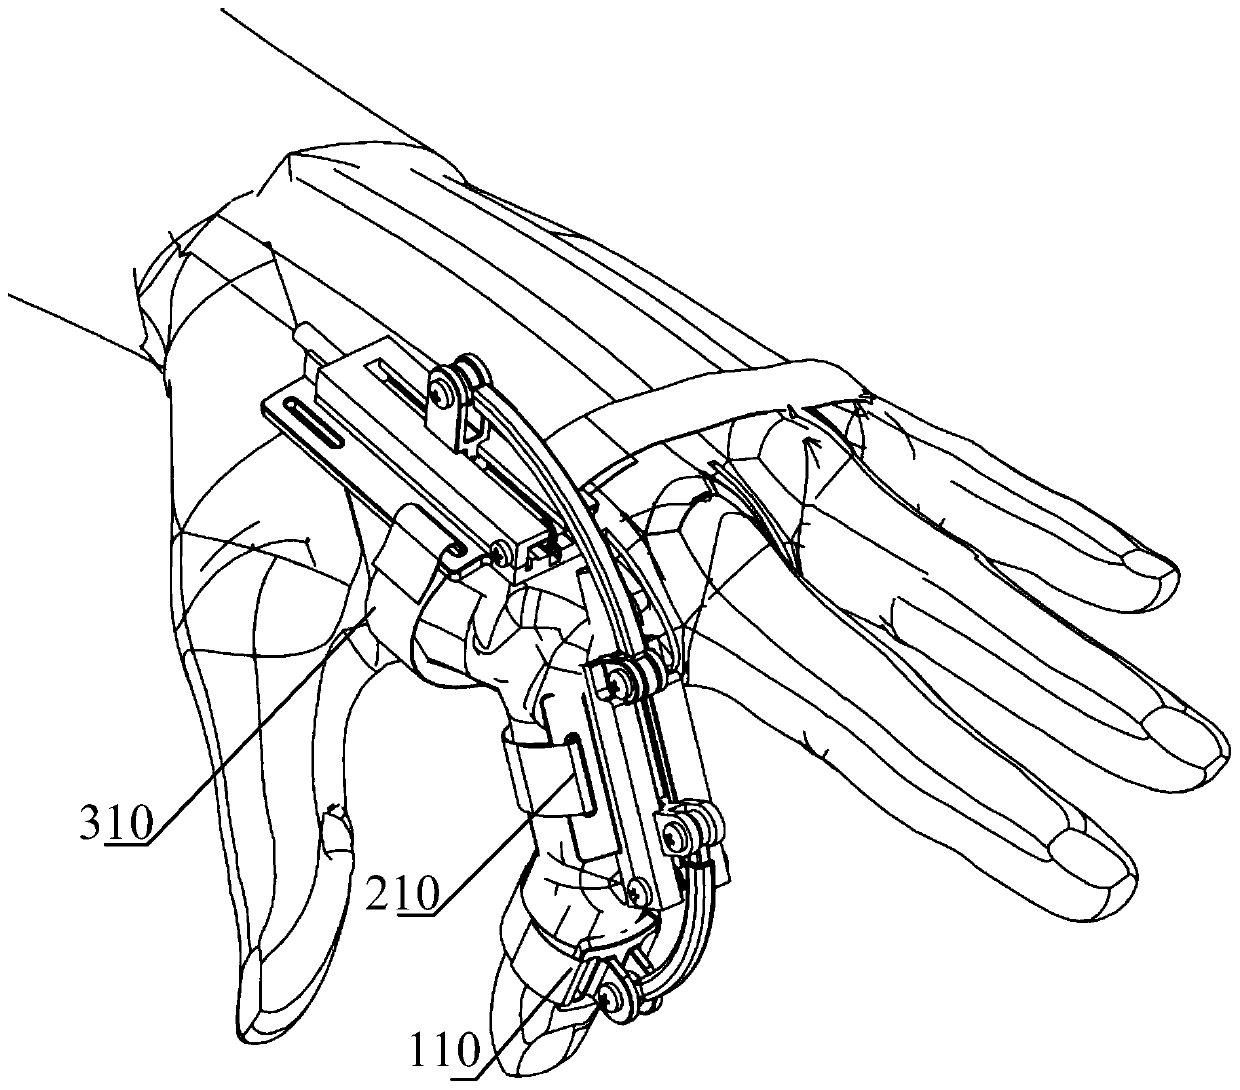 Hand exoskeleton mechanism and robot